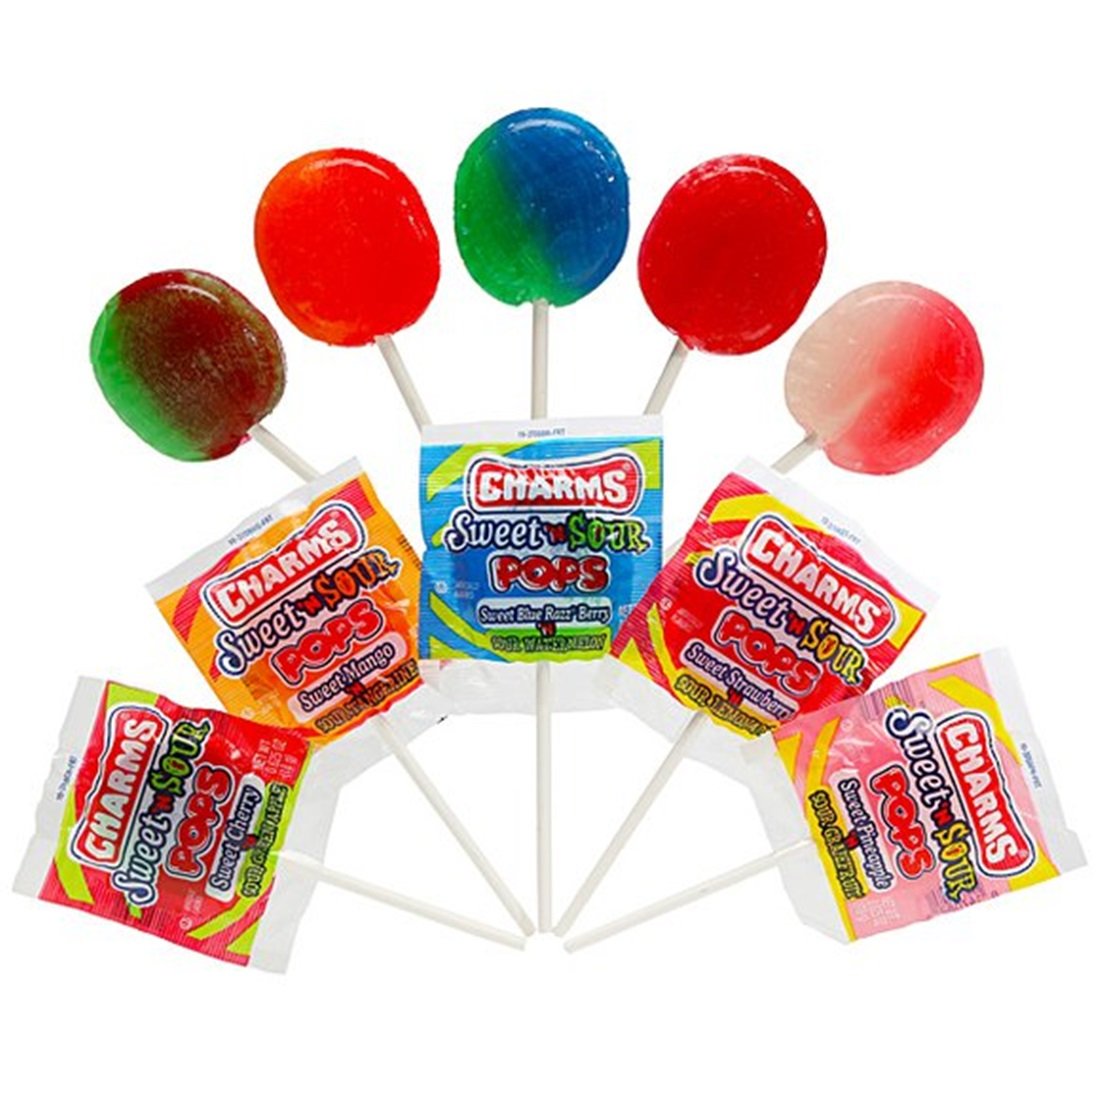  Charms Sweet N Sour Pops Lollipops, 3.85 oz Bag